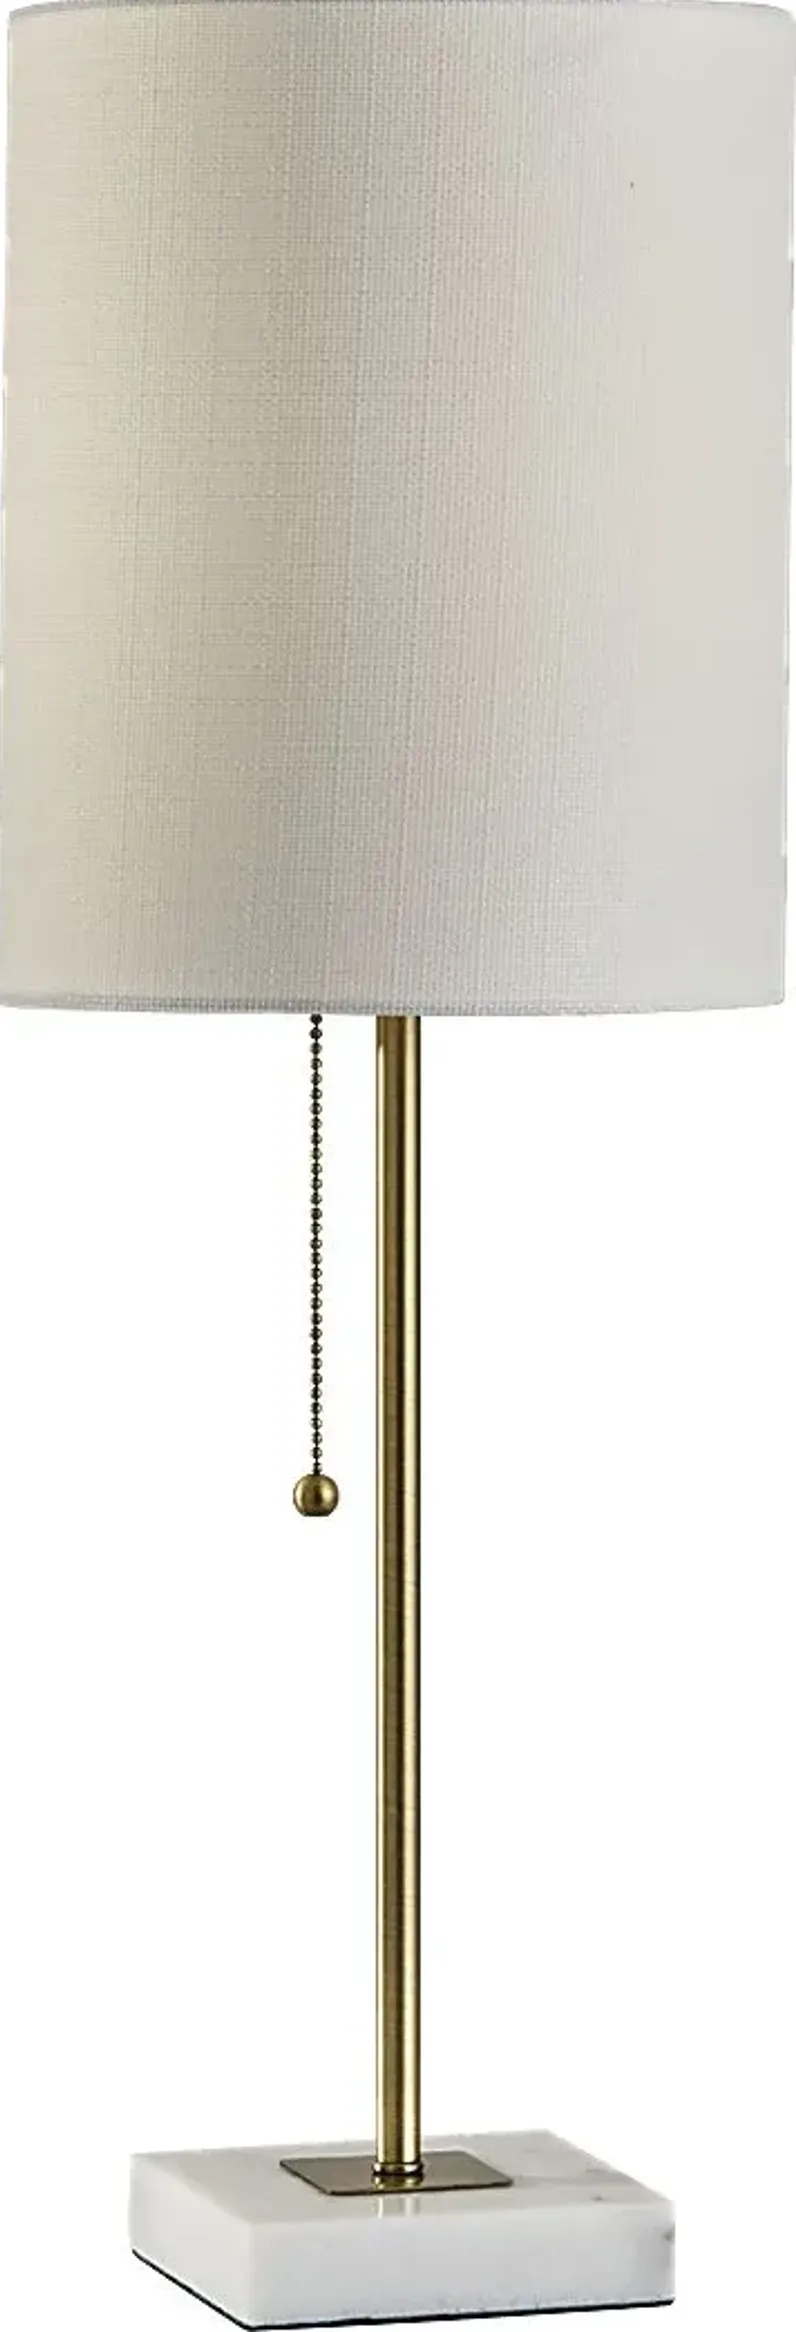 Abby Park Brass Lamp